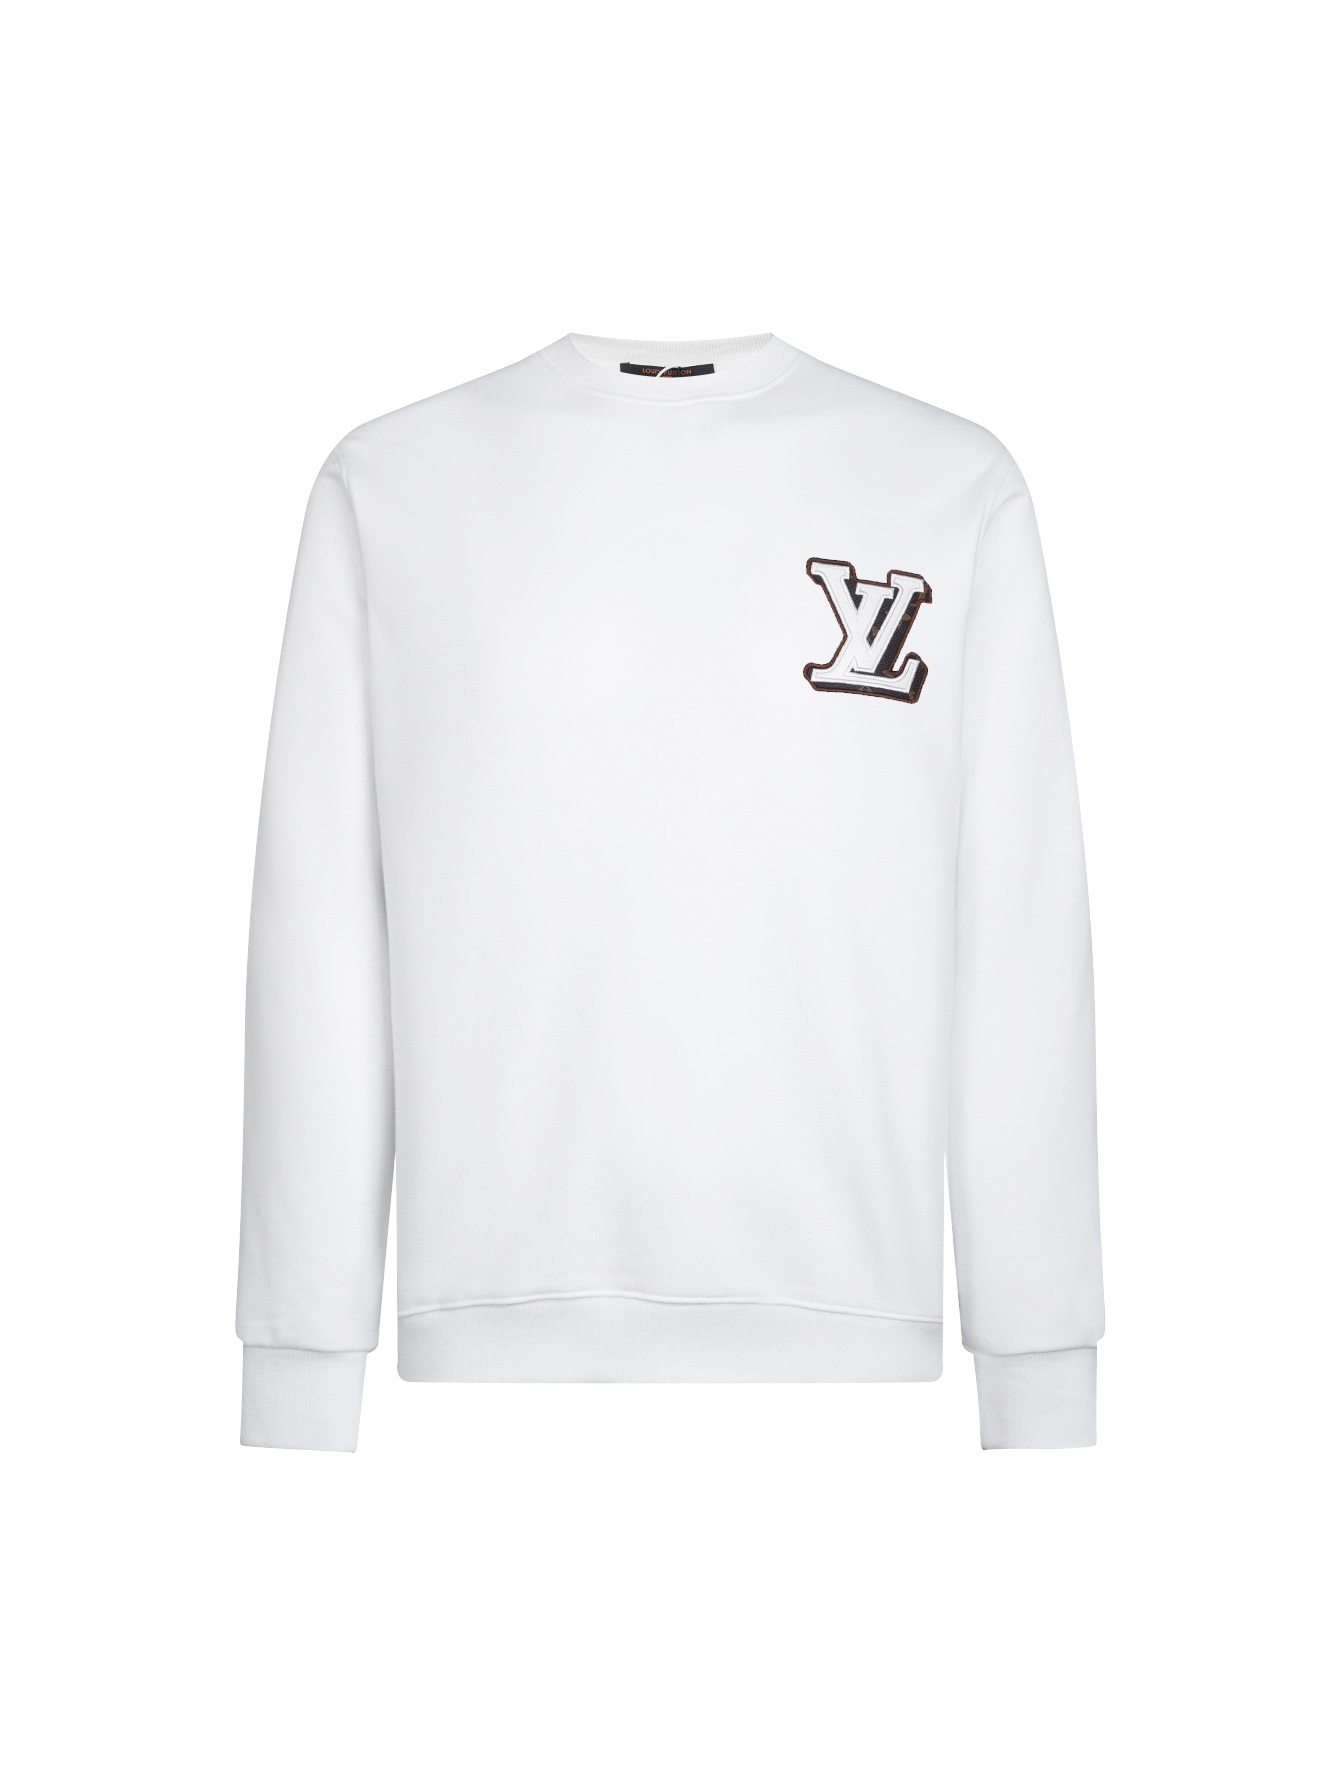 What Best Designer Replicas
 Louis Vuitton Clothing Sweatshirts Black White Embroidery Unisex